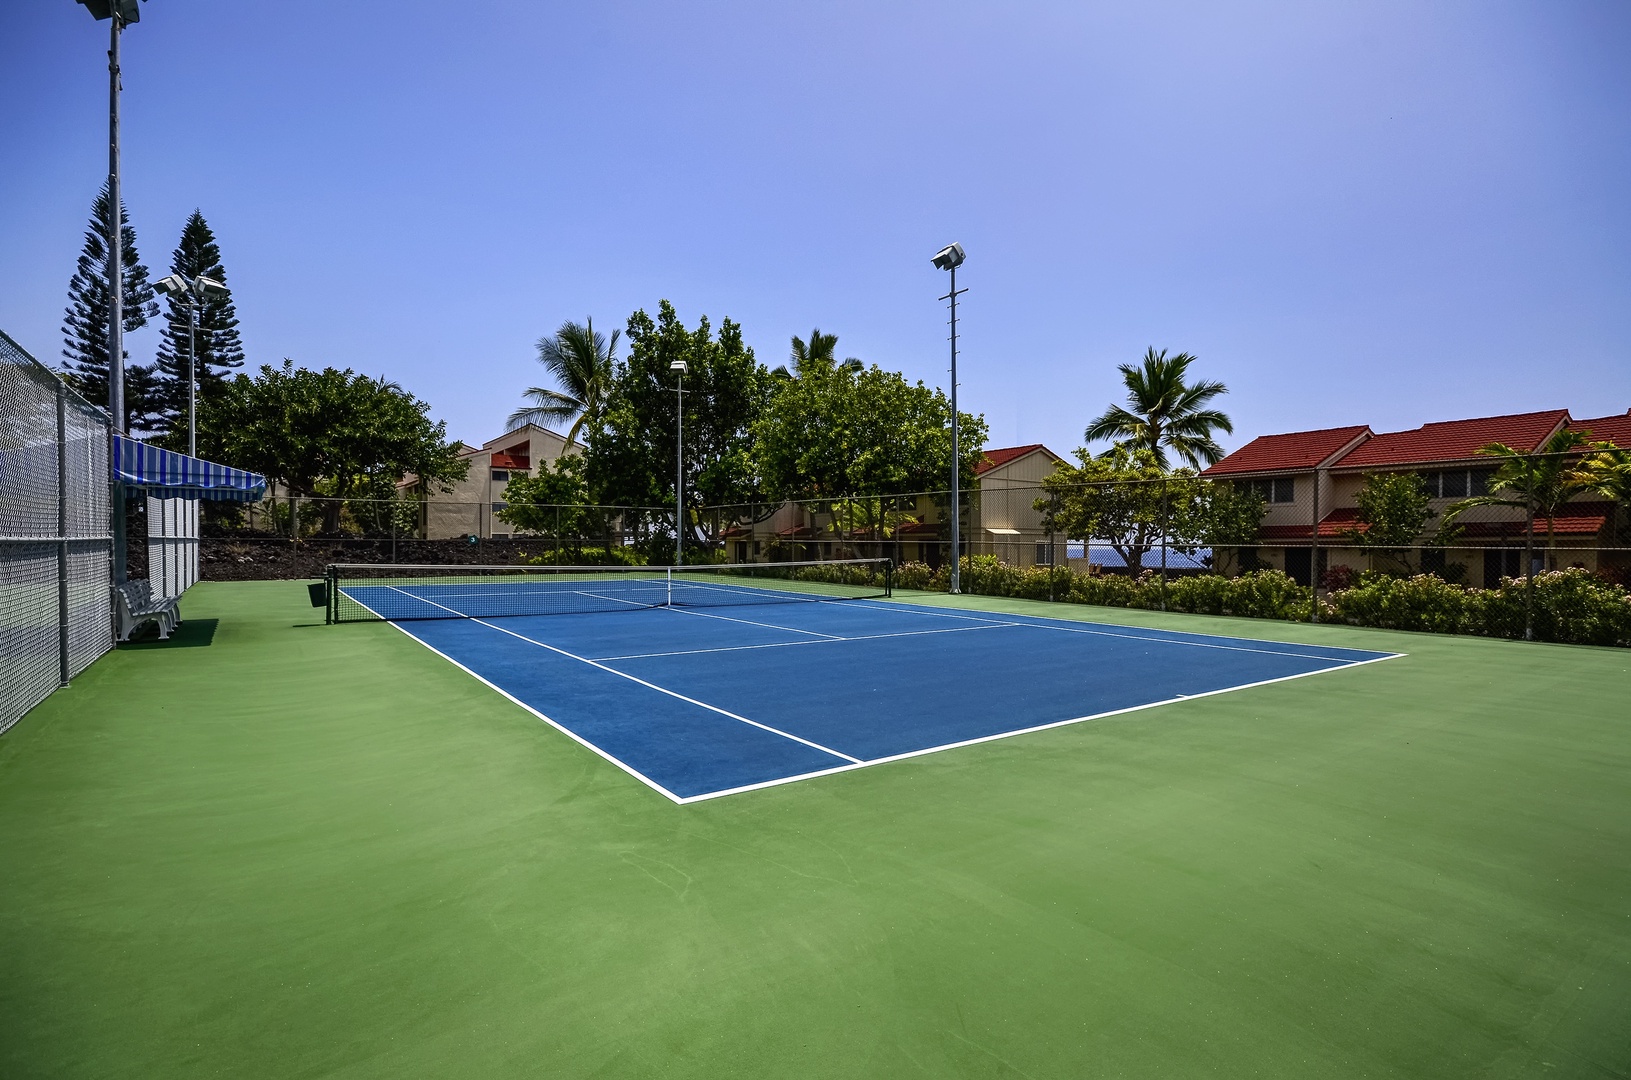 Kailua Kona Vacation Rentals, Keauhou Kona Surf & Racquet 9303 - Surf & Racquet Tennis Courts!